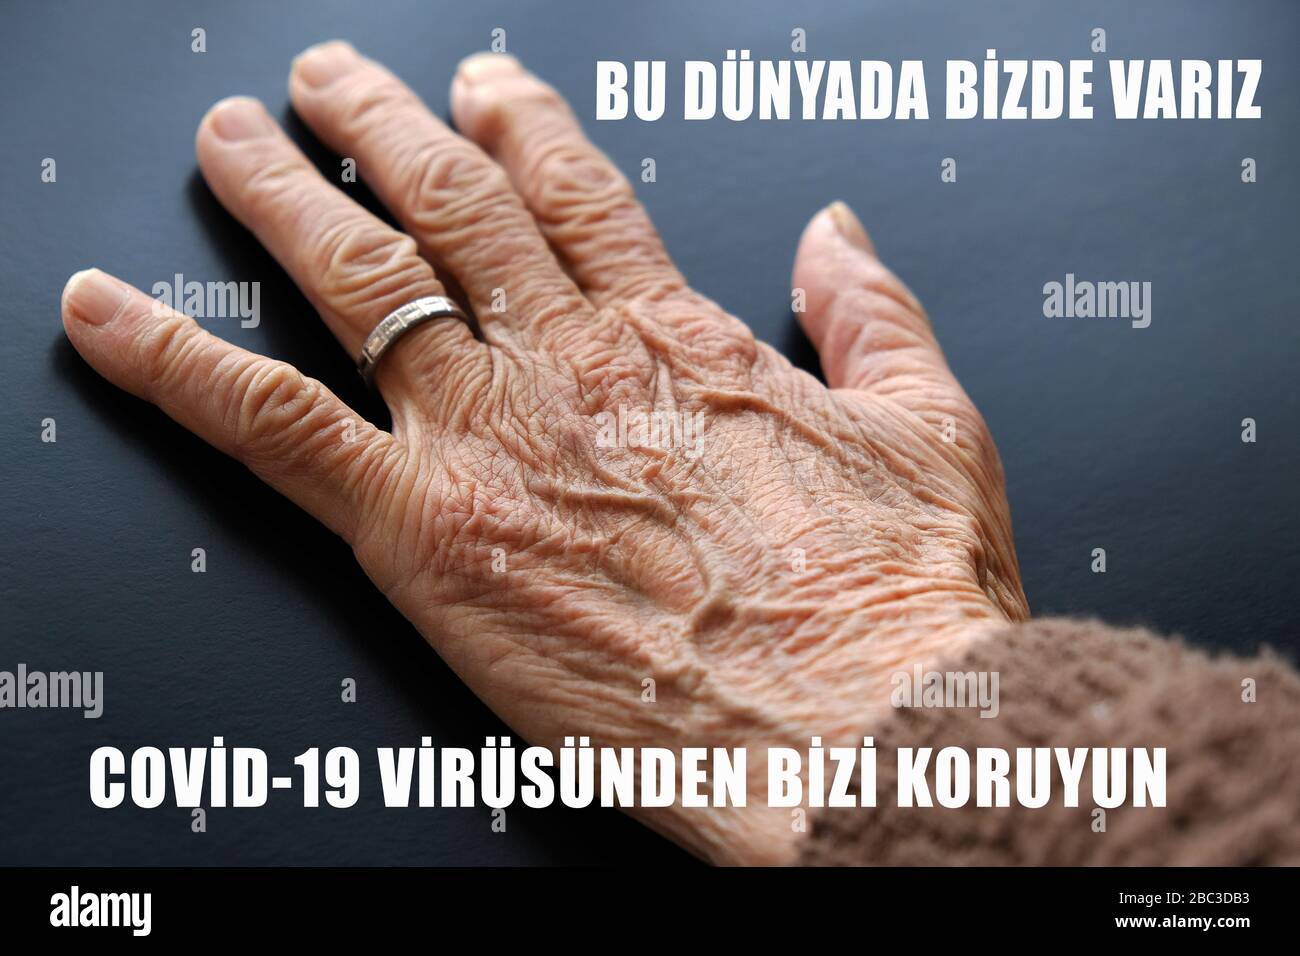 covid-19 virus and the elderly, Turkish warning studies on elderly, Stock Photo